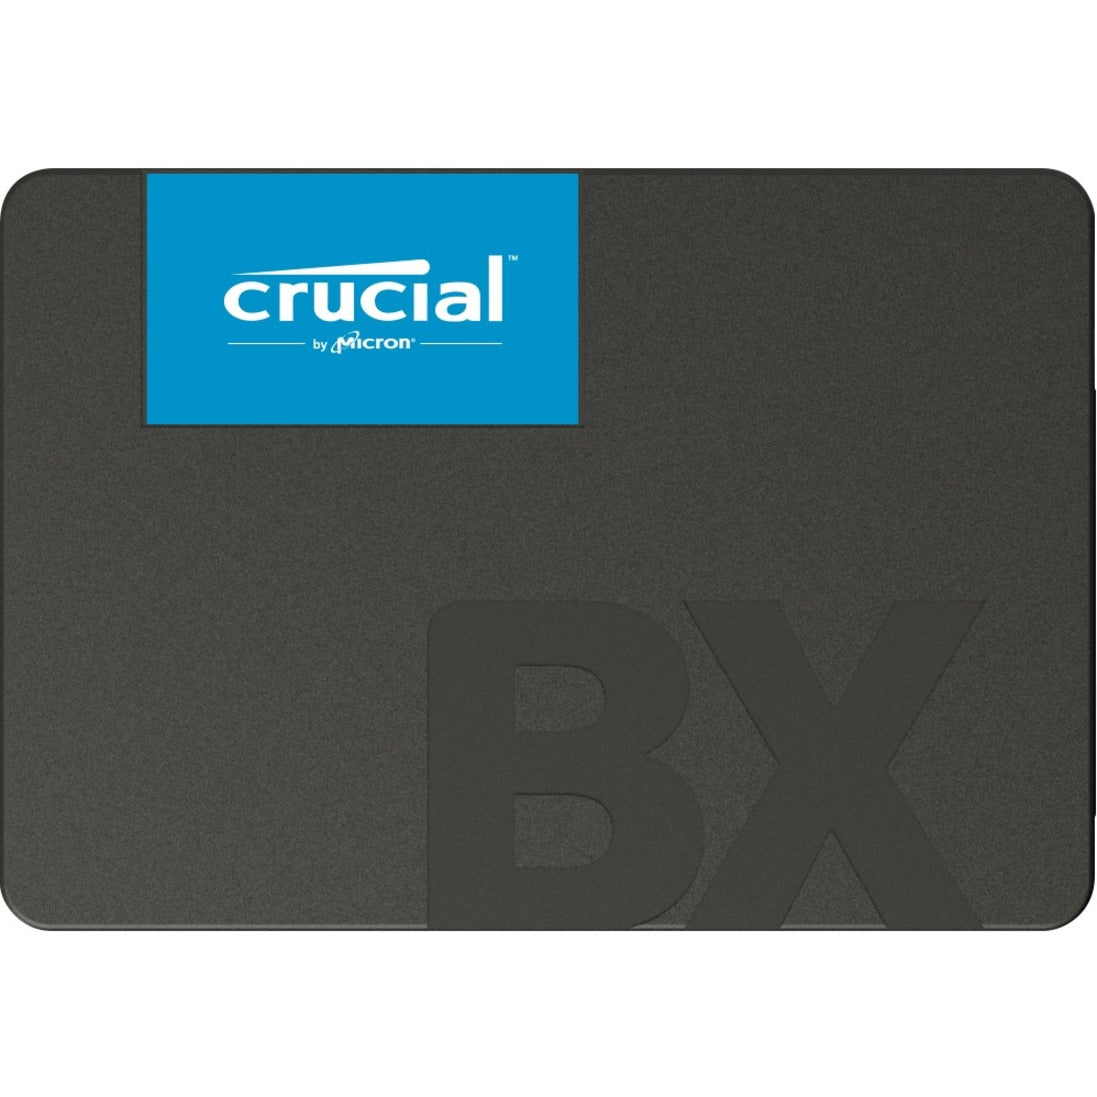 Crucial CT2000BX500SSD1 Crucial BX500 2TB 3D NAND SATA 2.5-inch SSD, High Performance, 720TB Endurance, Fast Read/Write Speeds